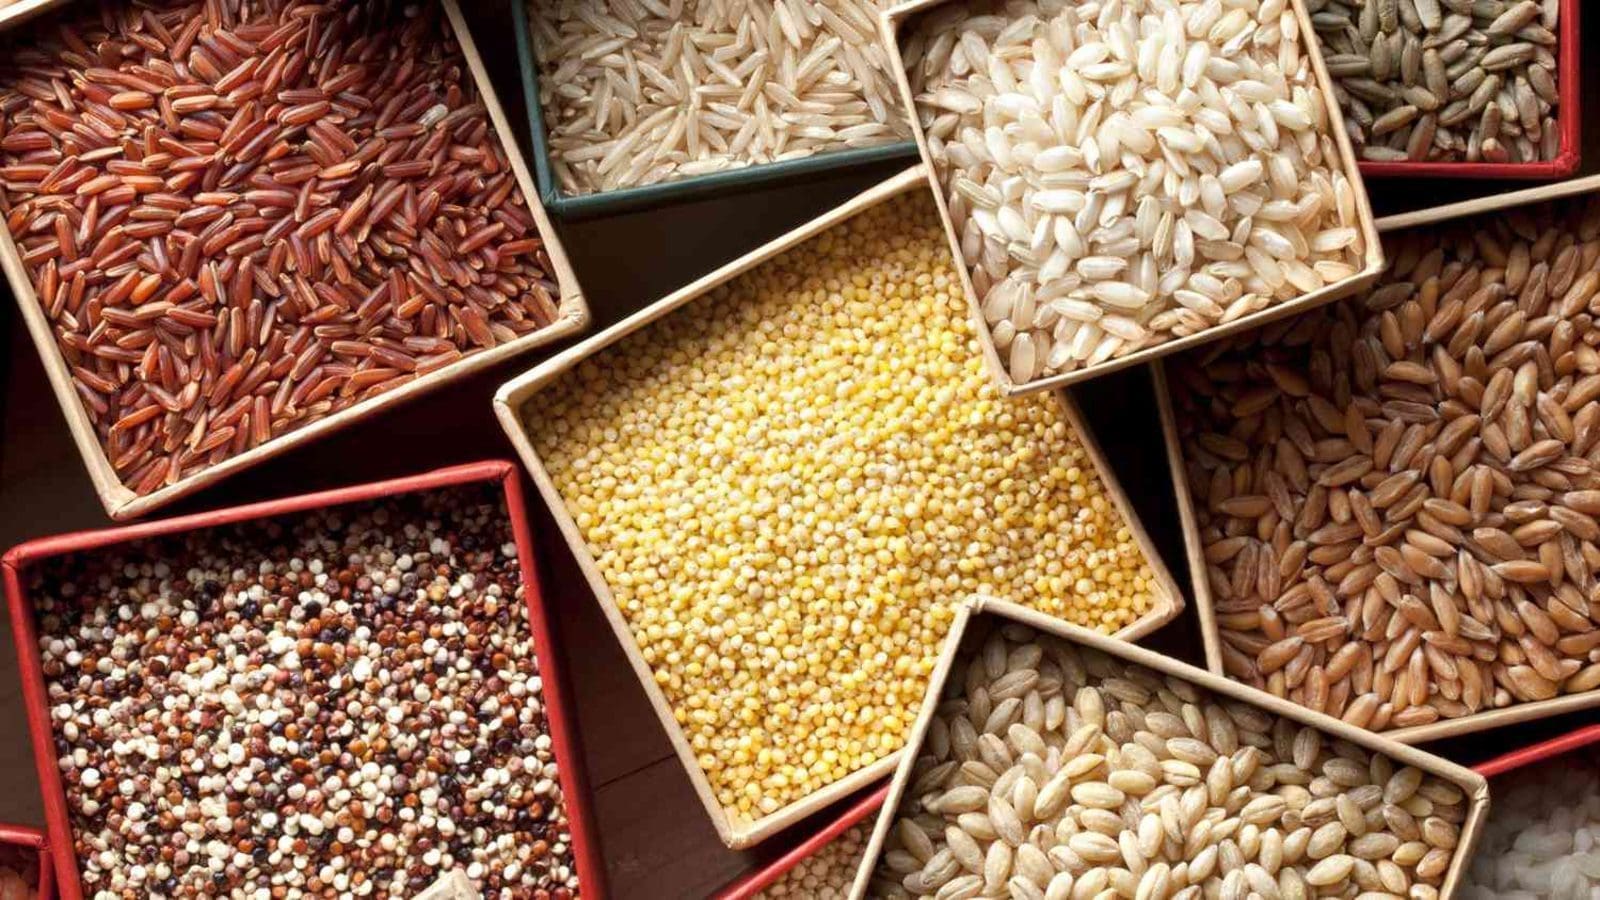 EU implements tariffs on Russian grain imports to aid farmers